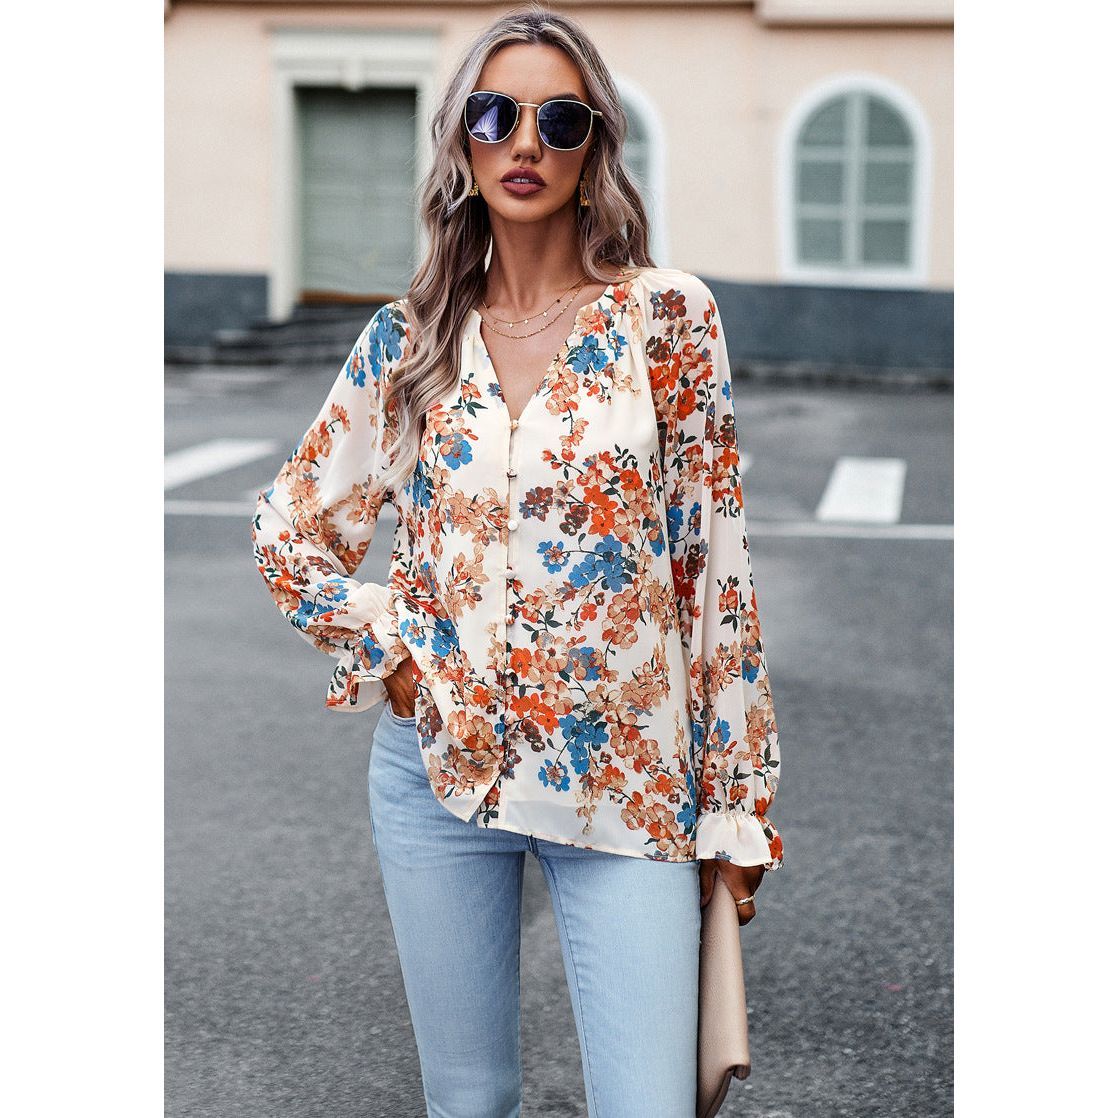 Women's Tops Casual Floral Print V Neck Long Sleeve Shirts Loose Chiffon Blouses Shirts Tops - Jointcorp